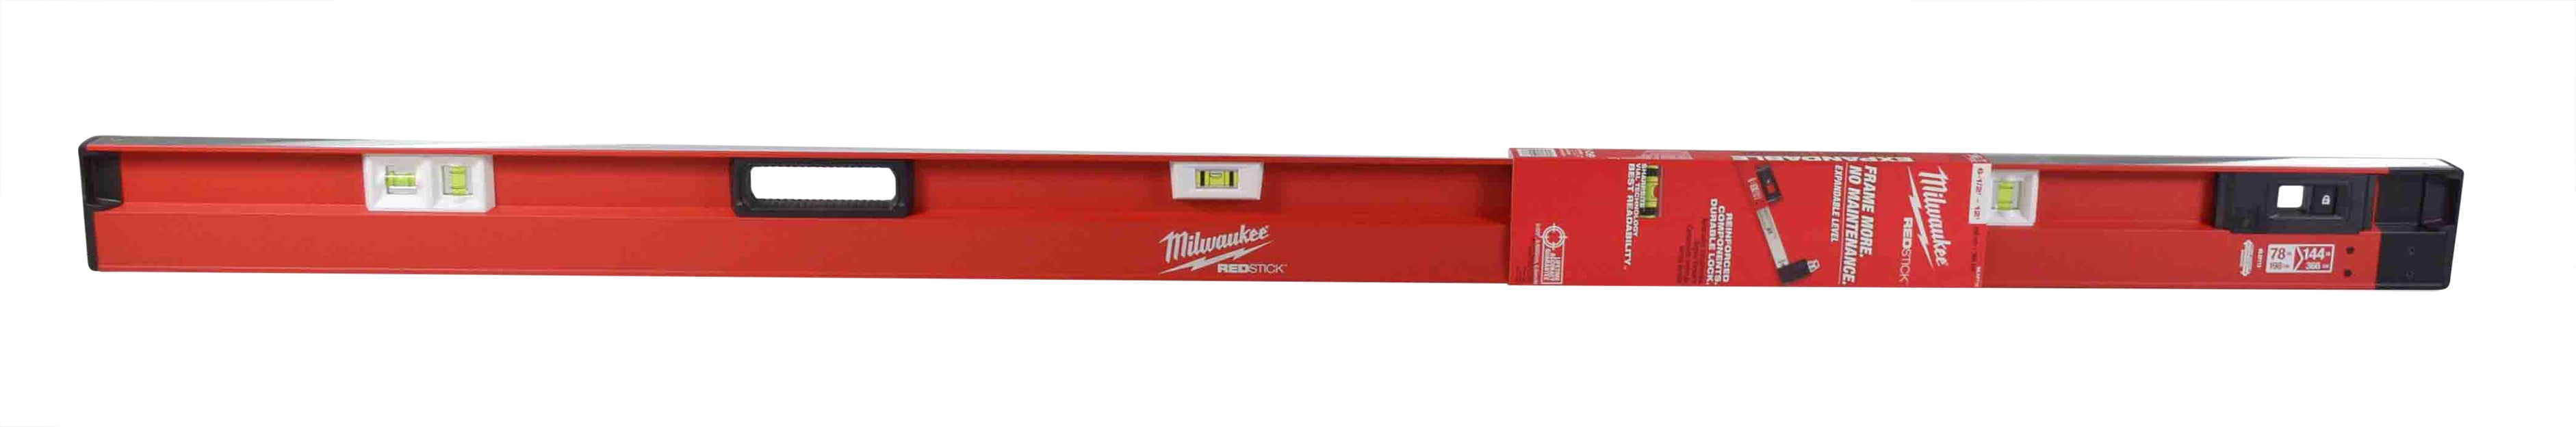 Milwaukee-MLXP712-78-144-REDSTICK-Expandable-3-Vial-Aluminum-Plate-Level-image-1